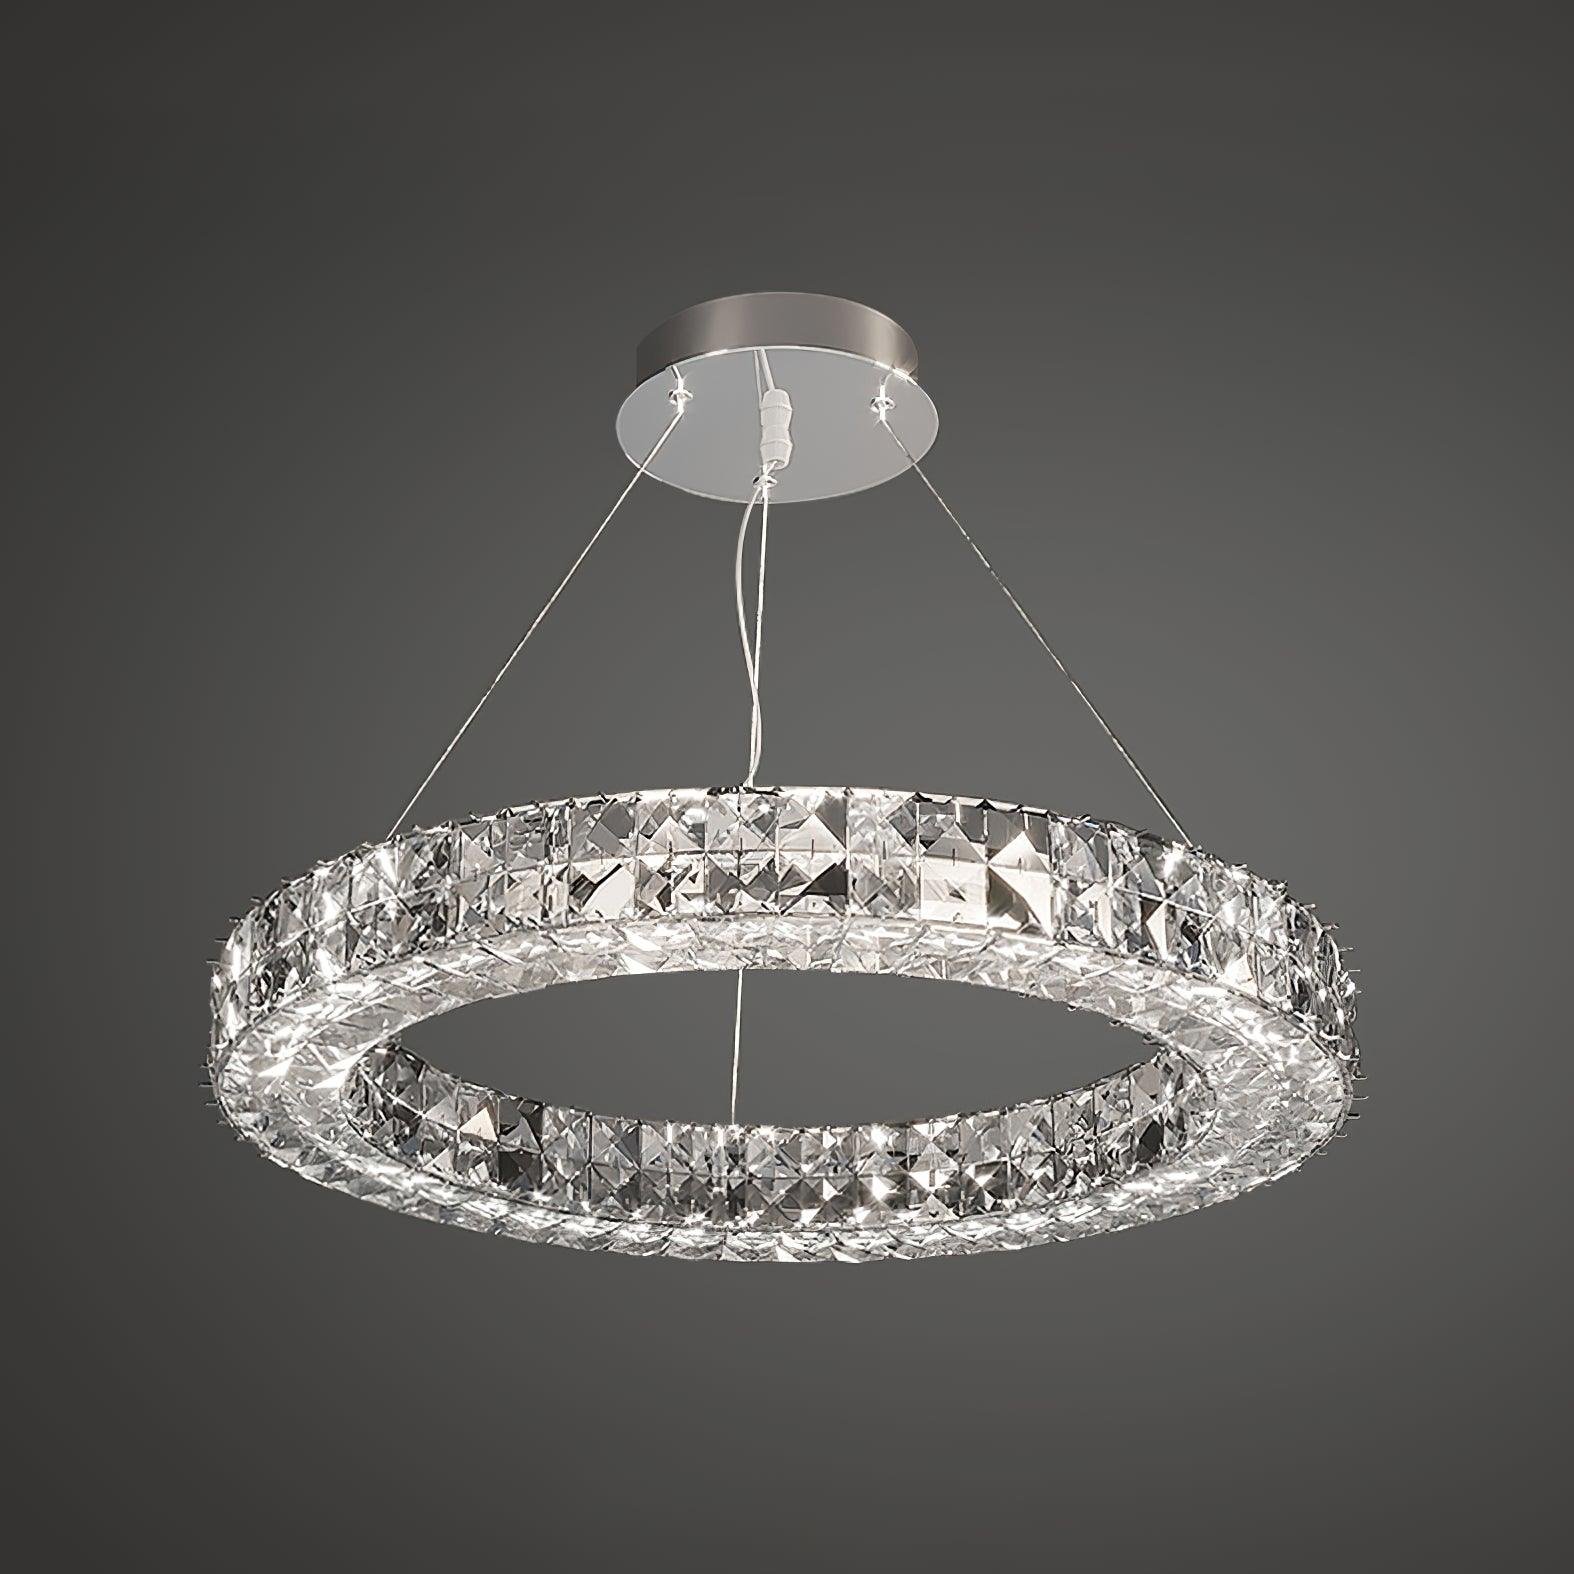 Silver Spiridon Chandelier with a diameter of 23.6 inches and a height of 59 inches (or a diameter of 60cm and a height of 150cm). The chandelier emits a cool white light.